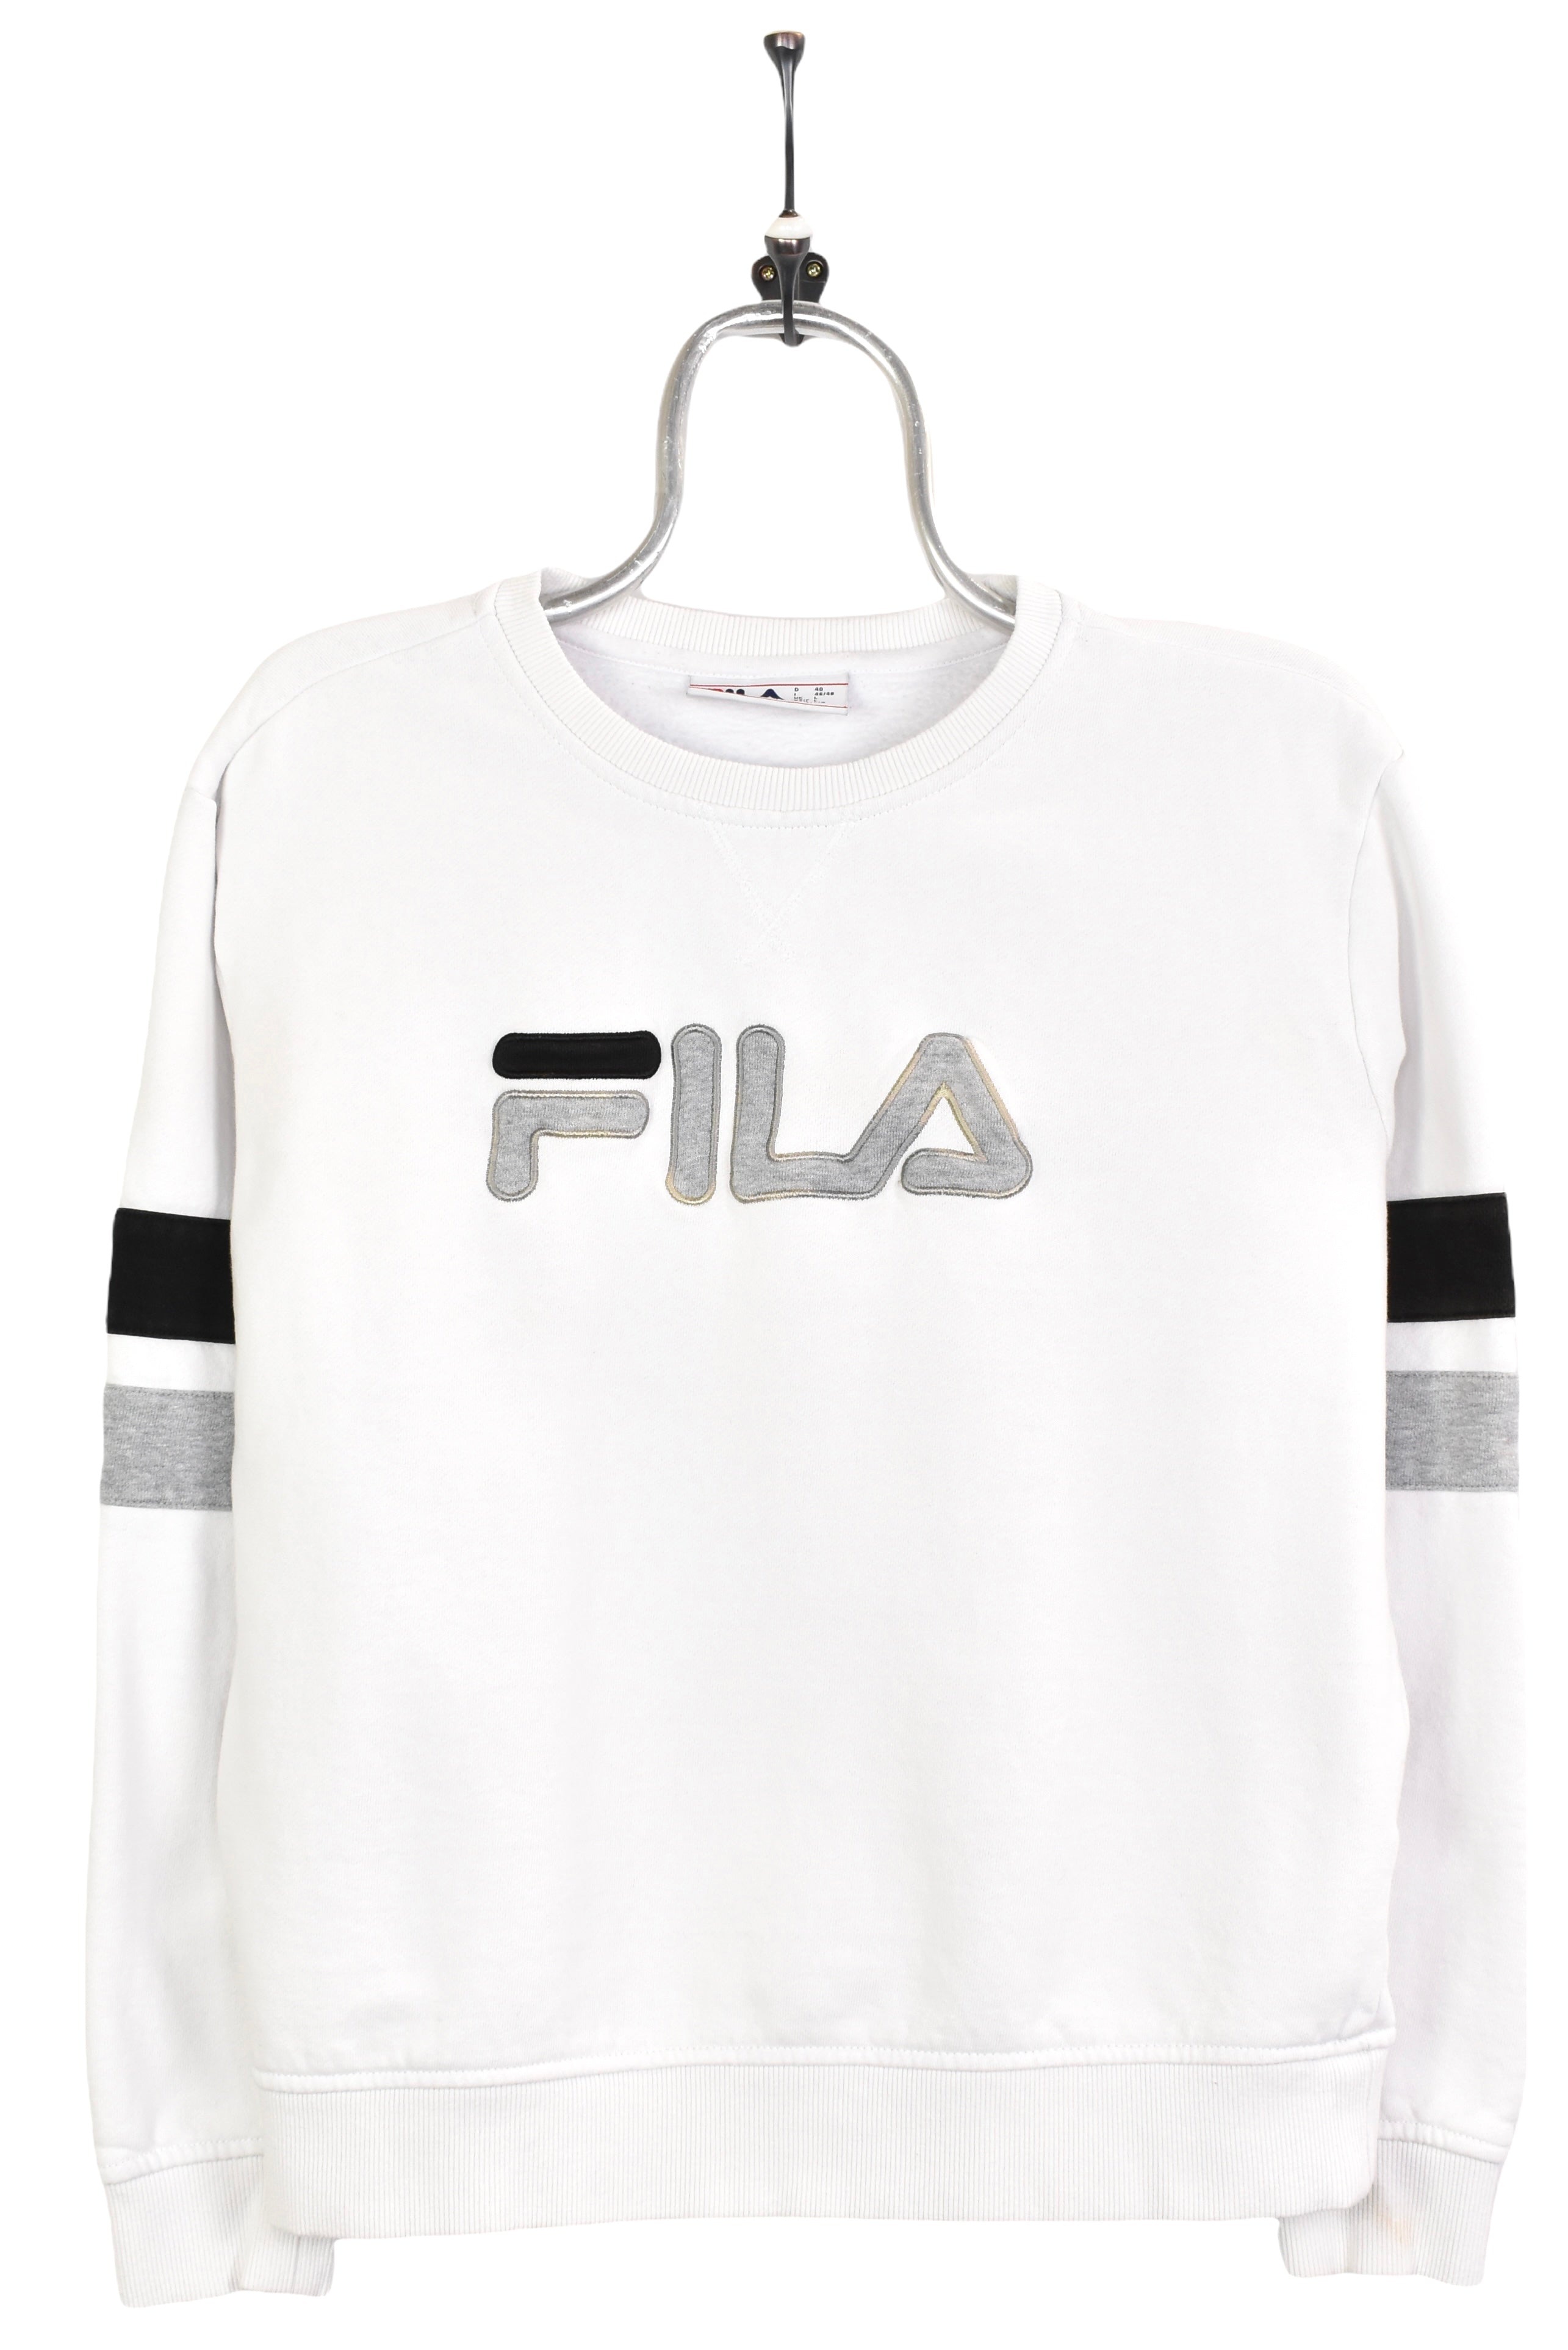 Vintage Women's Fila embroidered white sweatshirt | Large FILA